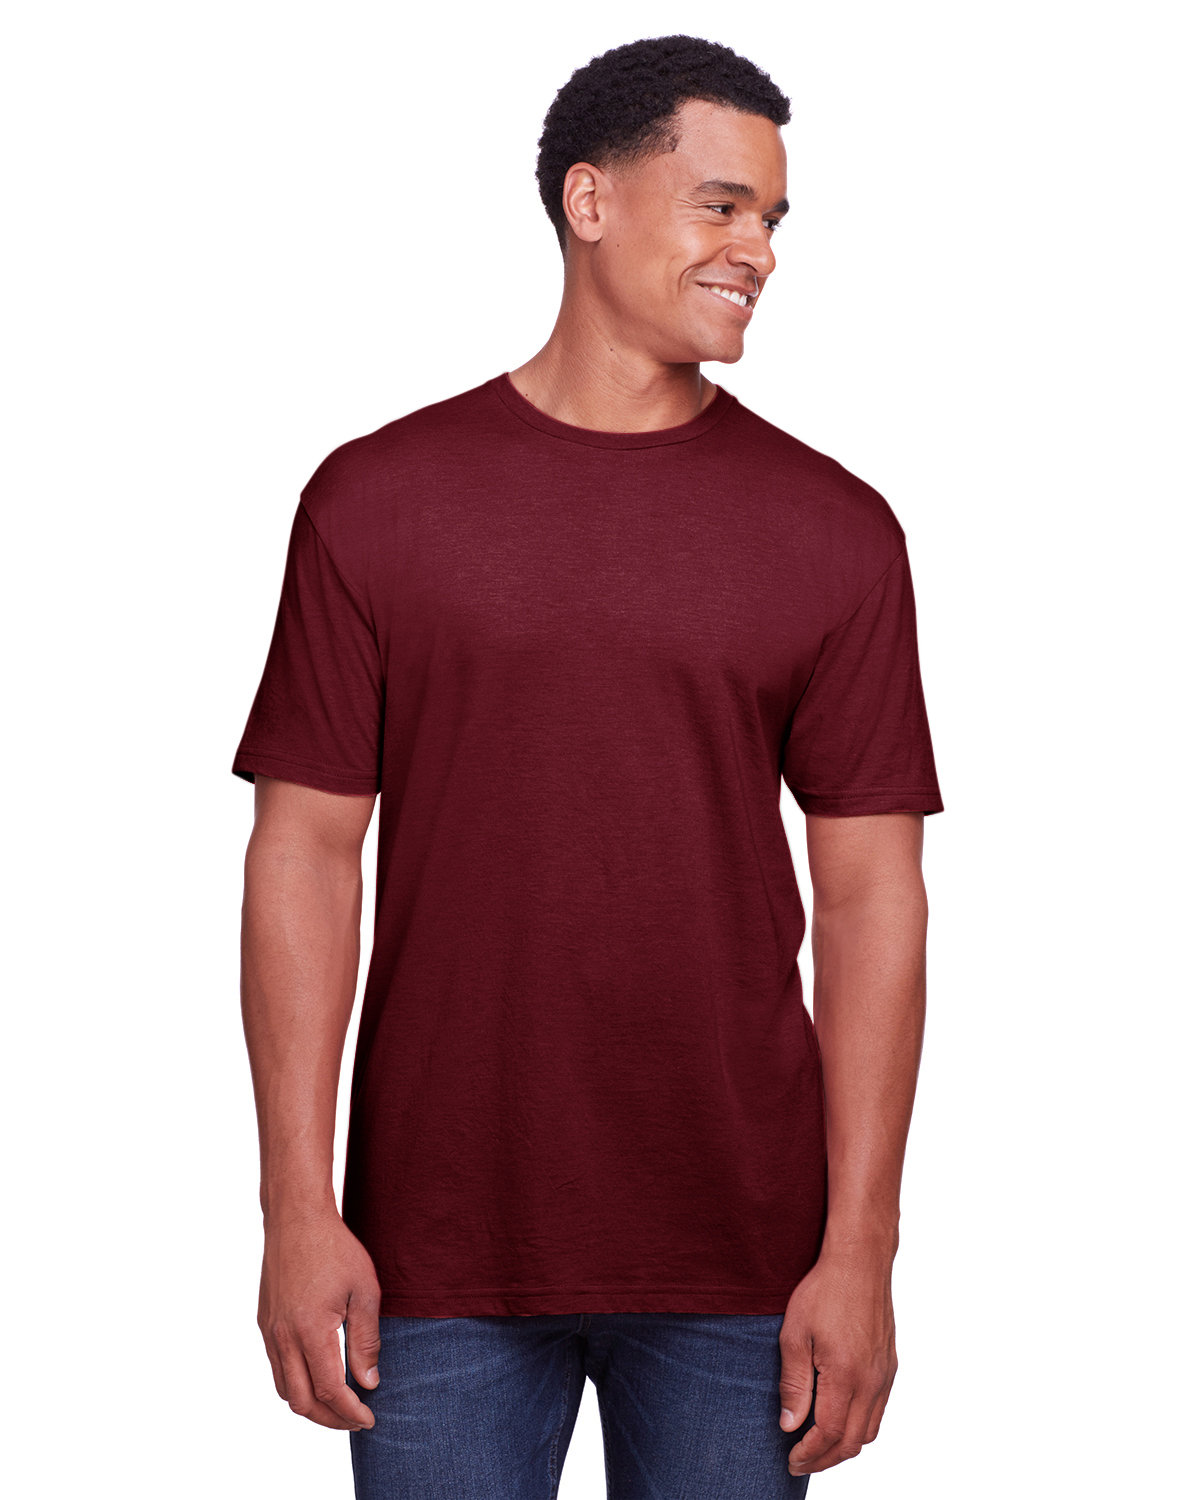 Gildan Men's Softstyle CVC T-Shirt maroon mist 